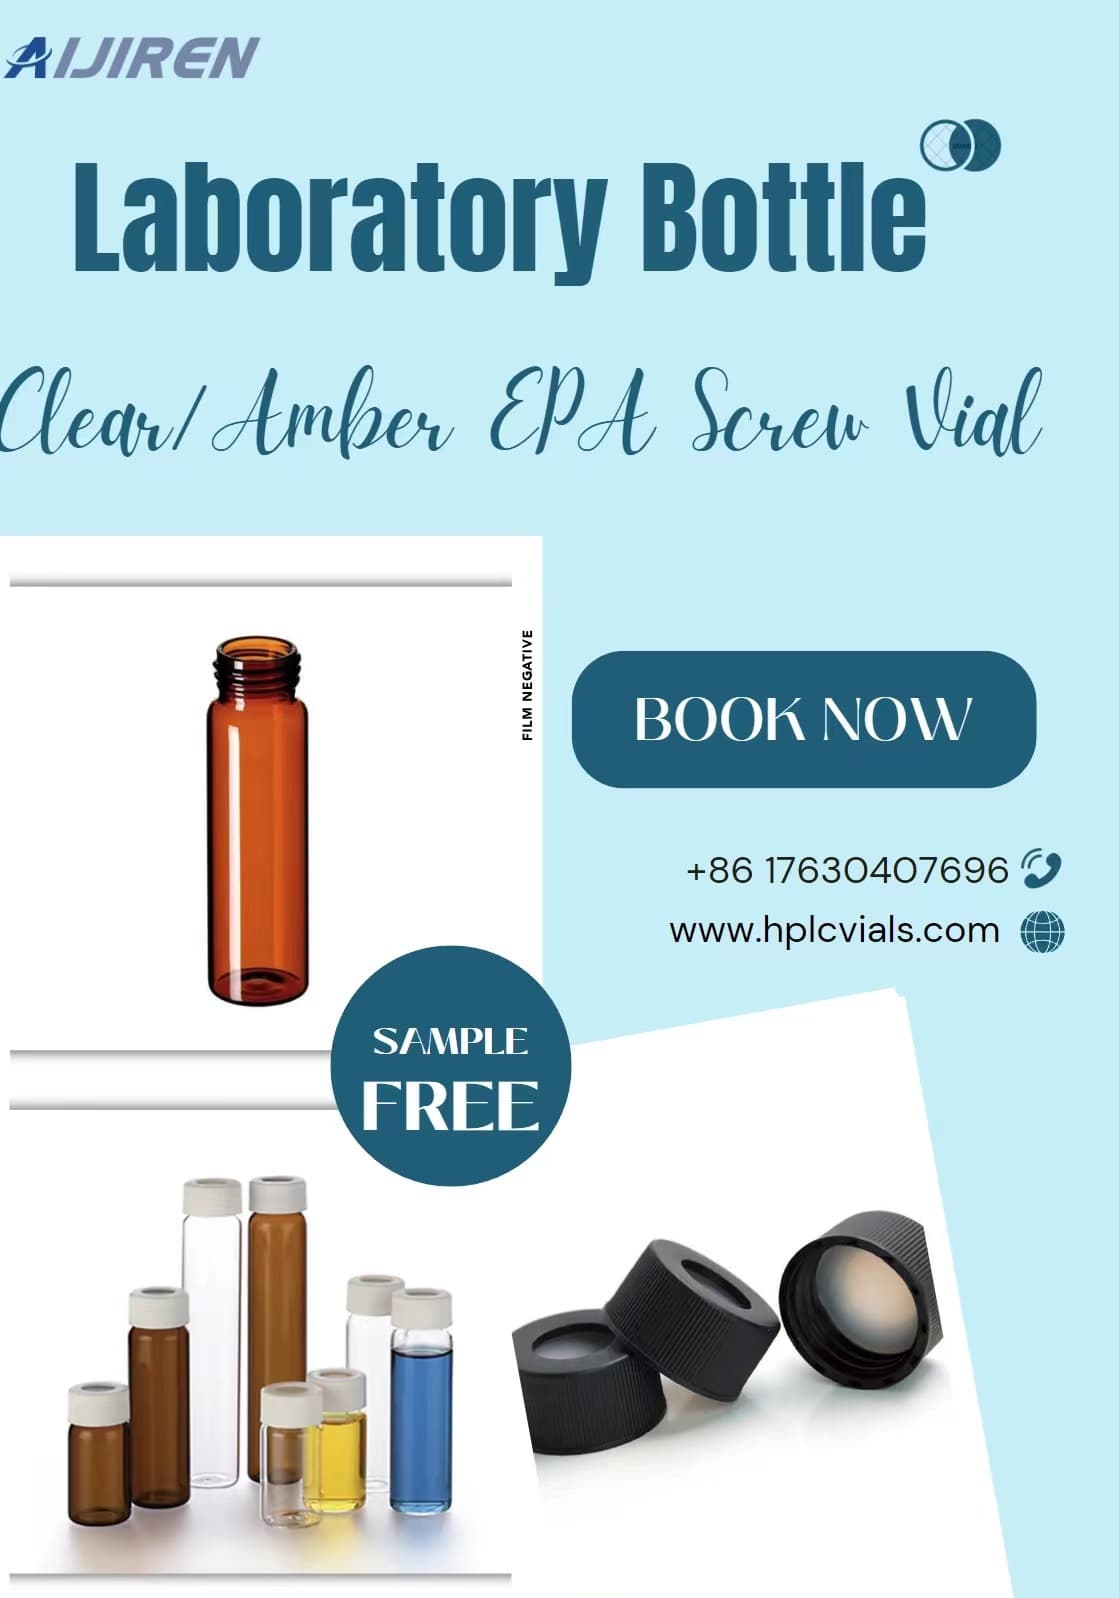 2ml autosampler vialChina supplier Clear/Amber EPA Screw Borosilicate Glass Vials for Instrumental Analysis